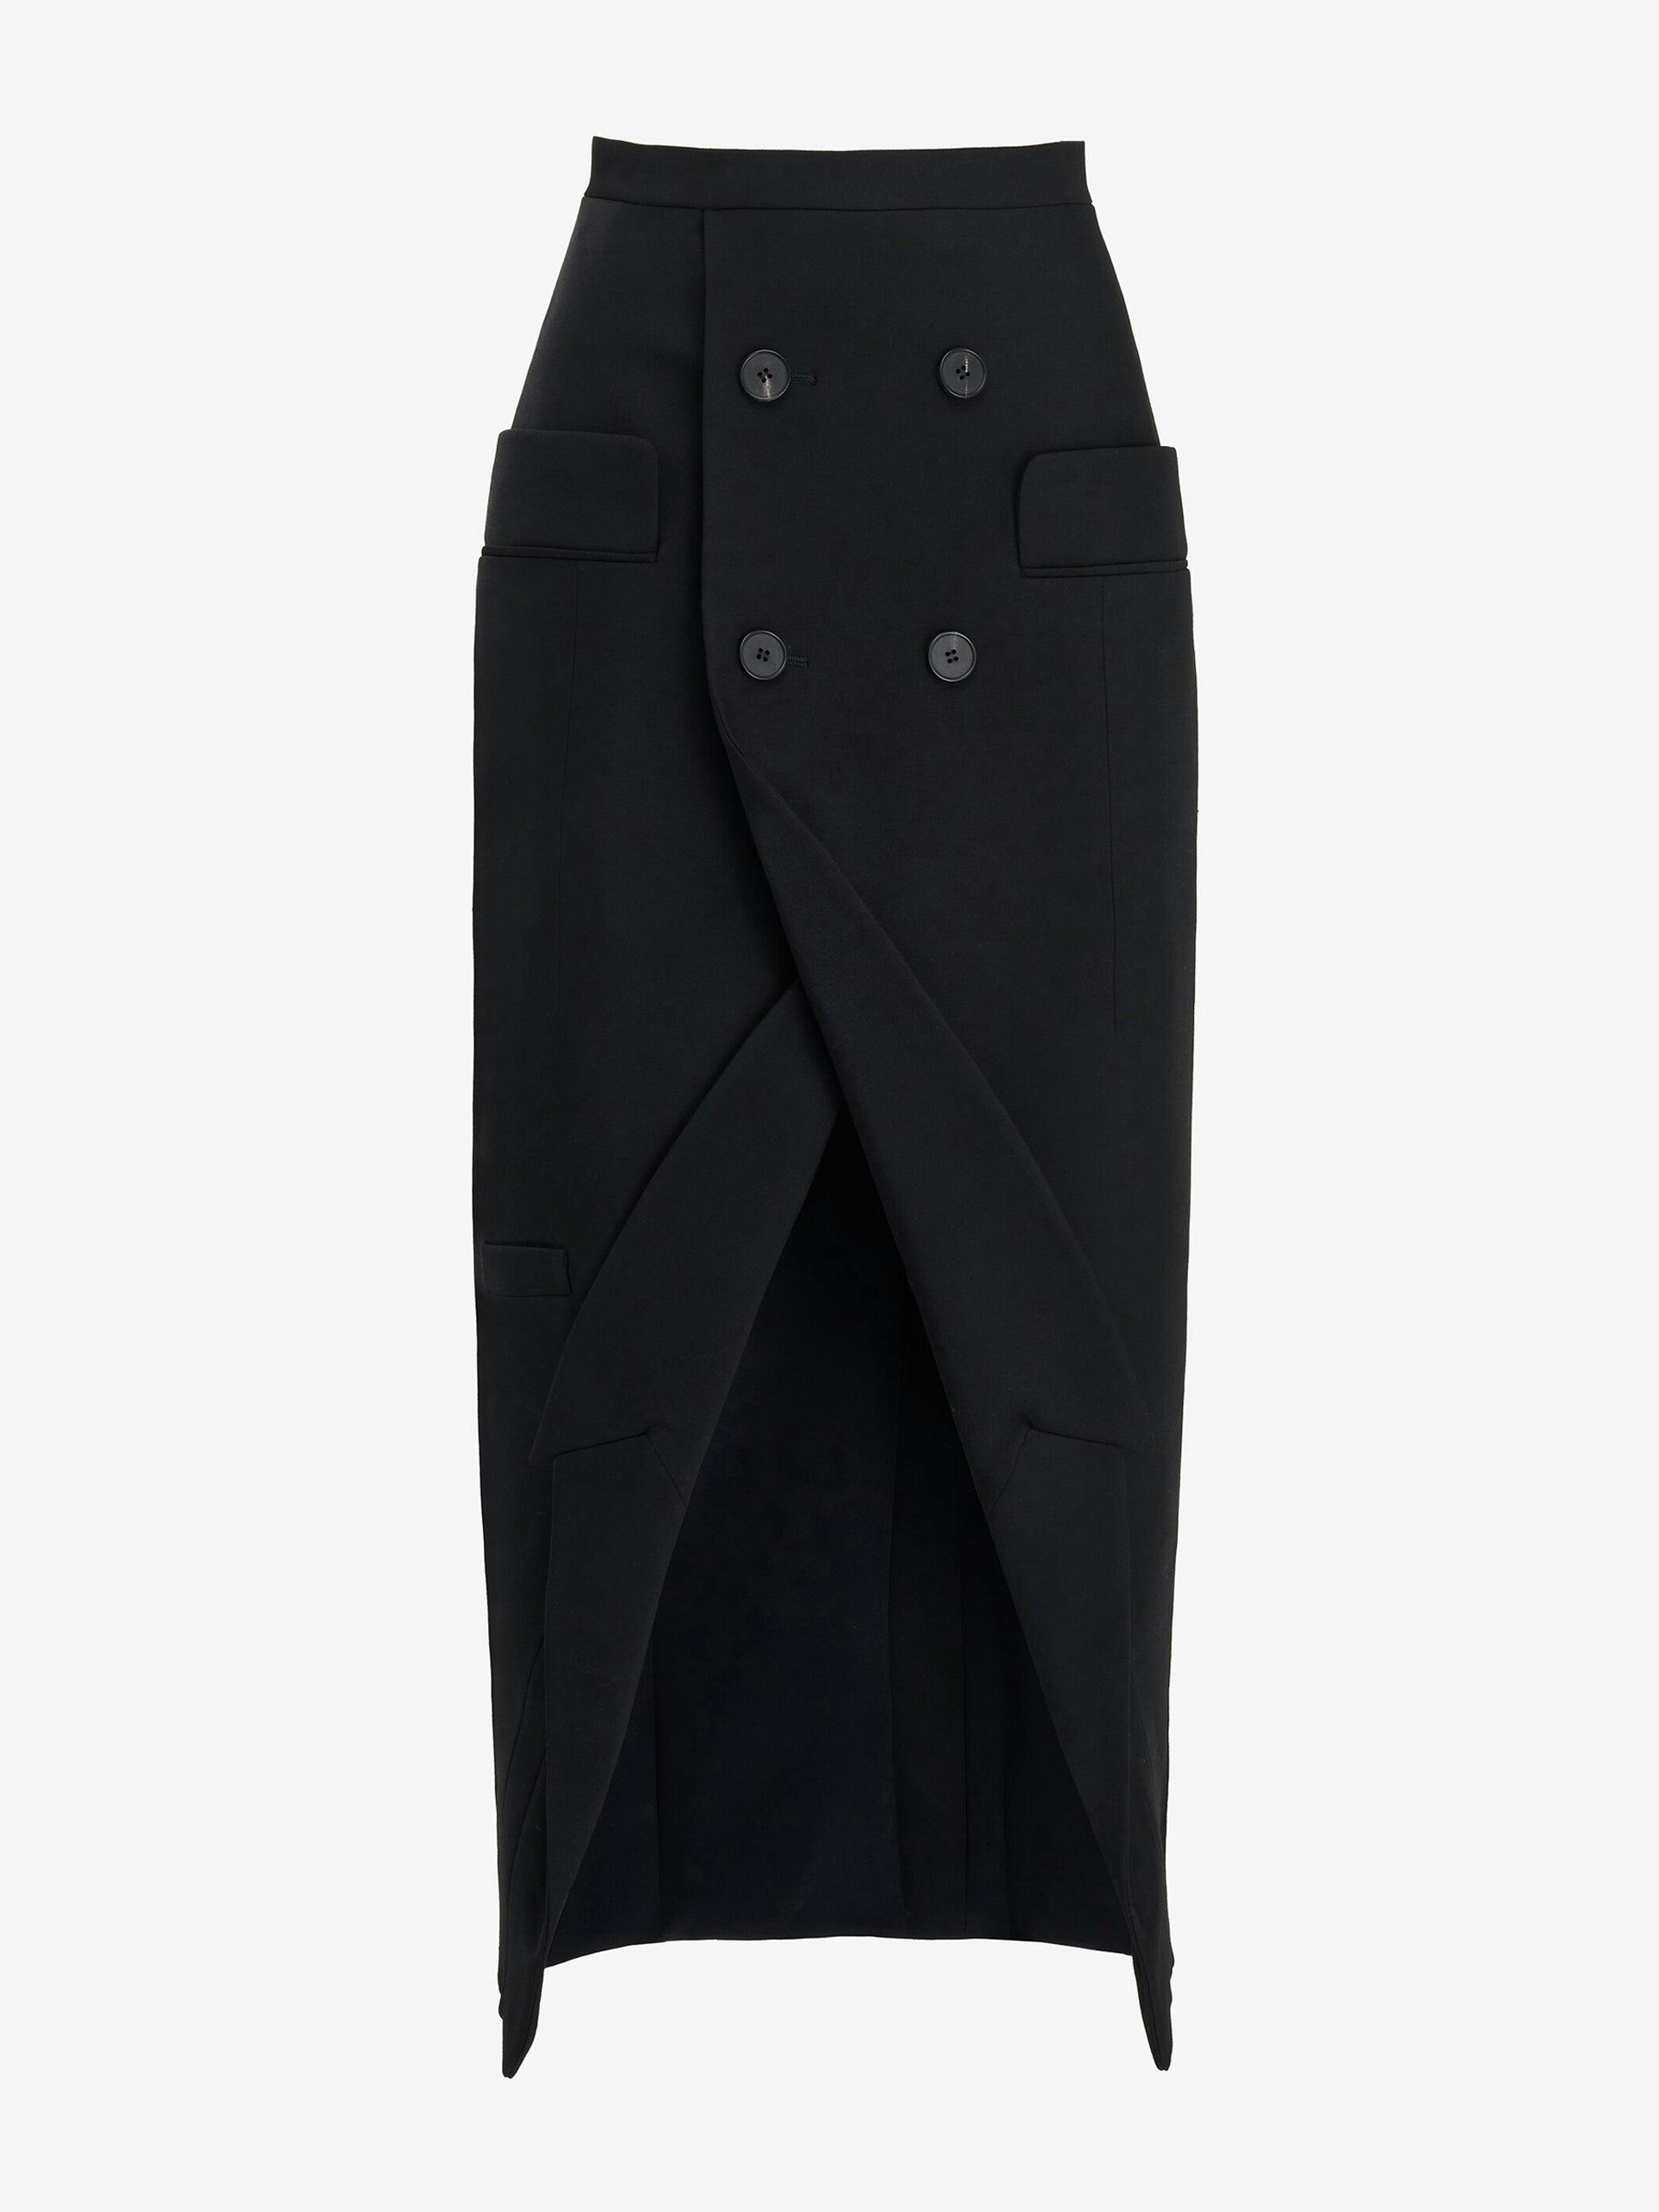 Women's Upside-down Slashed Skirt in Black